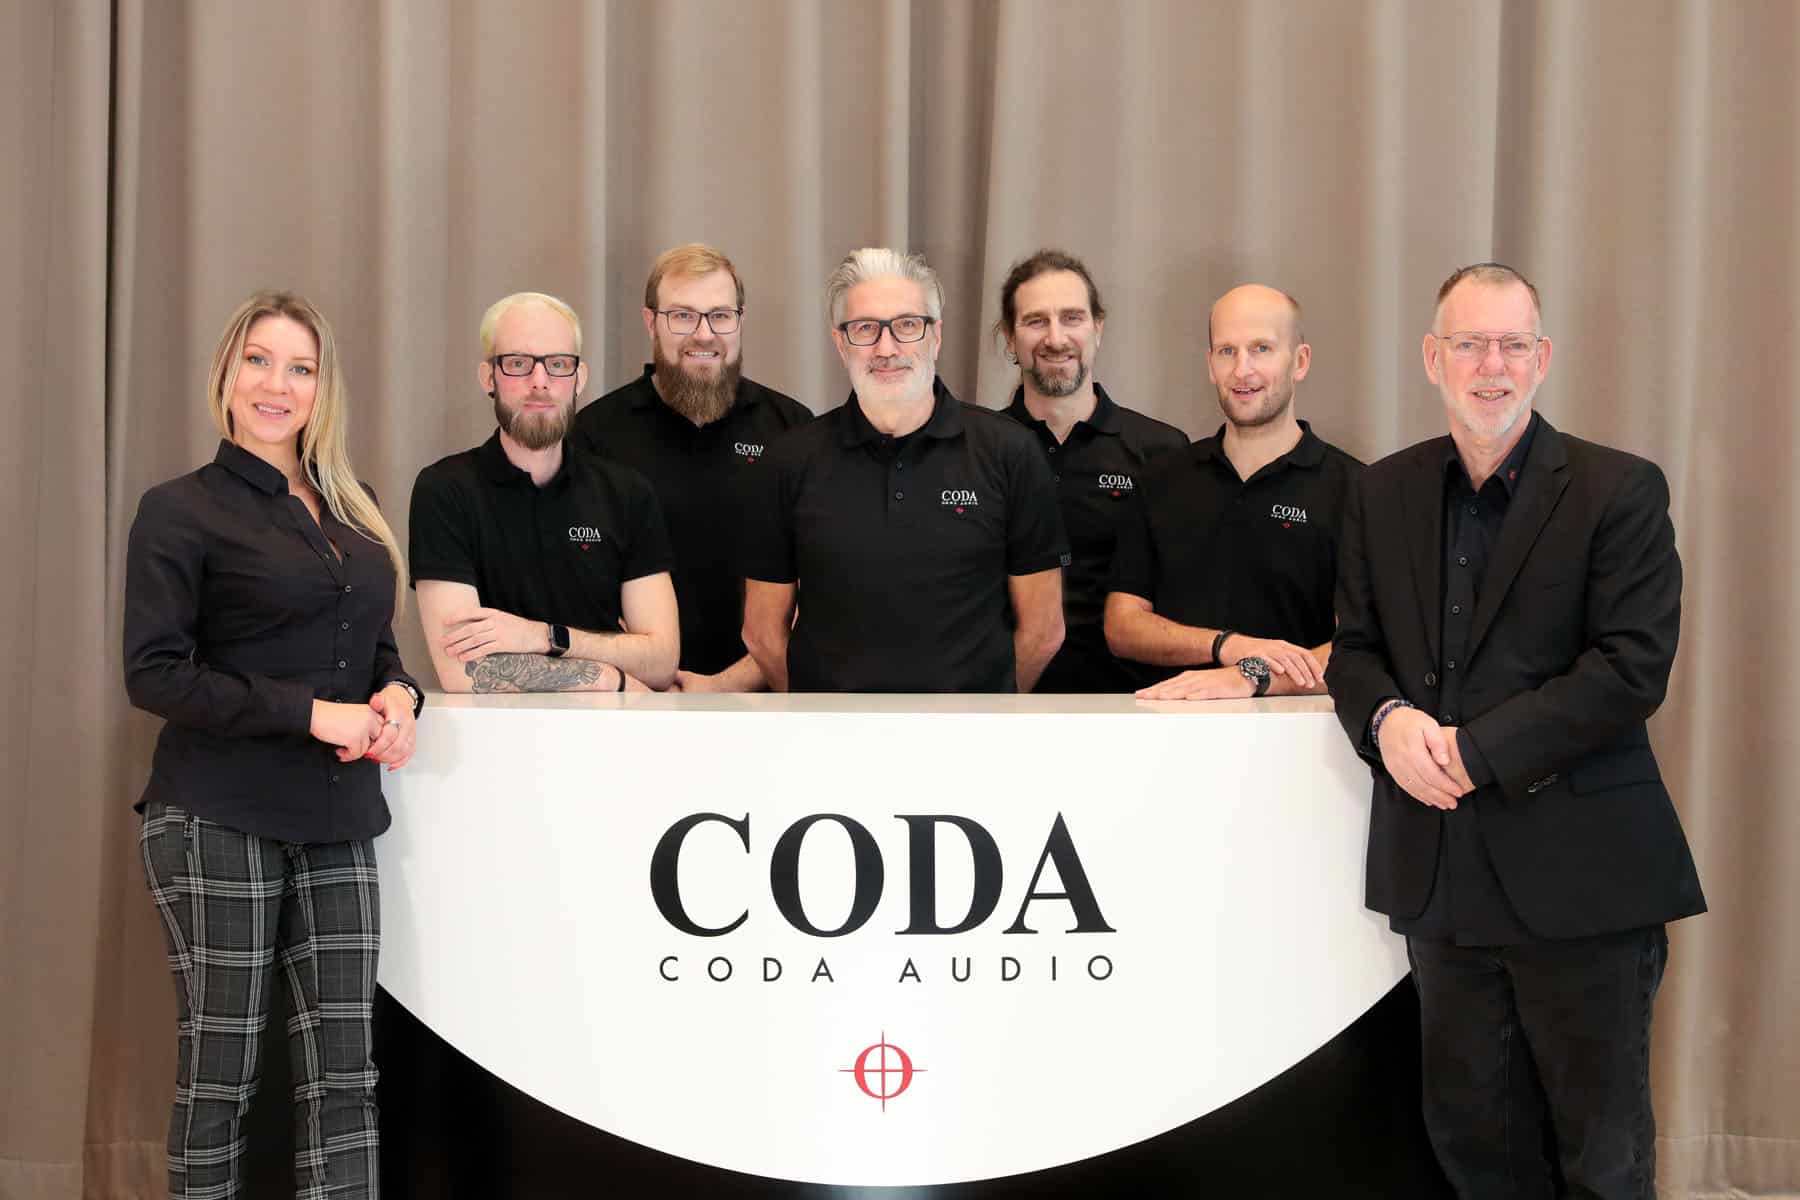 Coda-Deutschland-Team: Ton Groen (r.) mit (v.l.n.r.) Swetlana Cansi, Daniel Groen, Sebastian Bähr, Dirk Maron, Michael Schwarzer und Thomas Müller